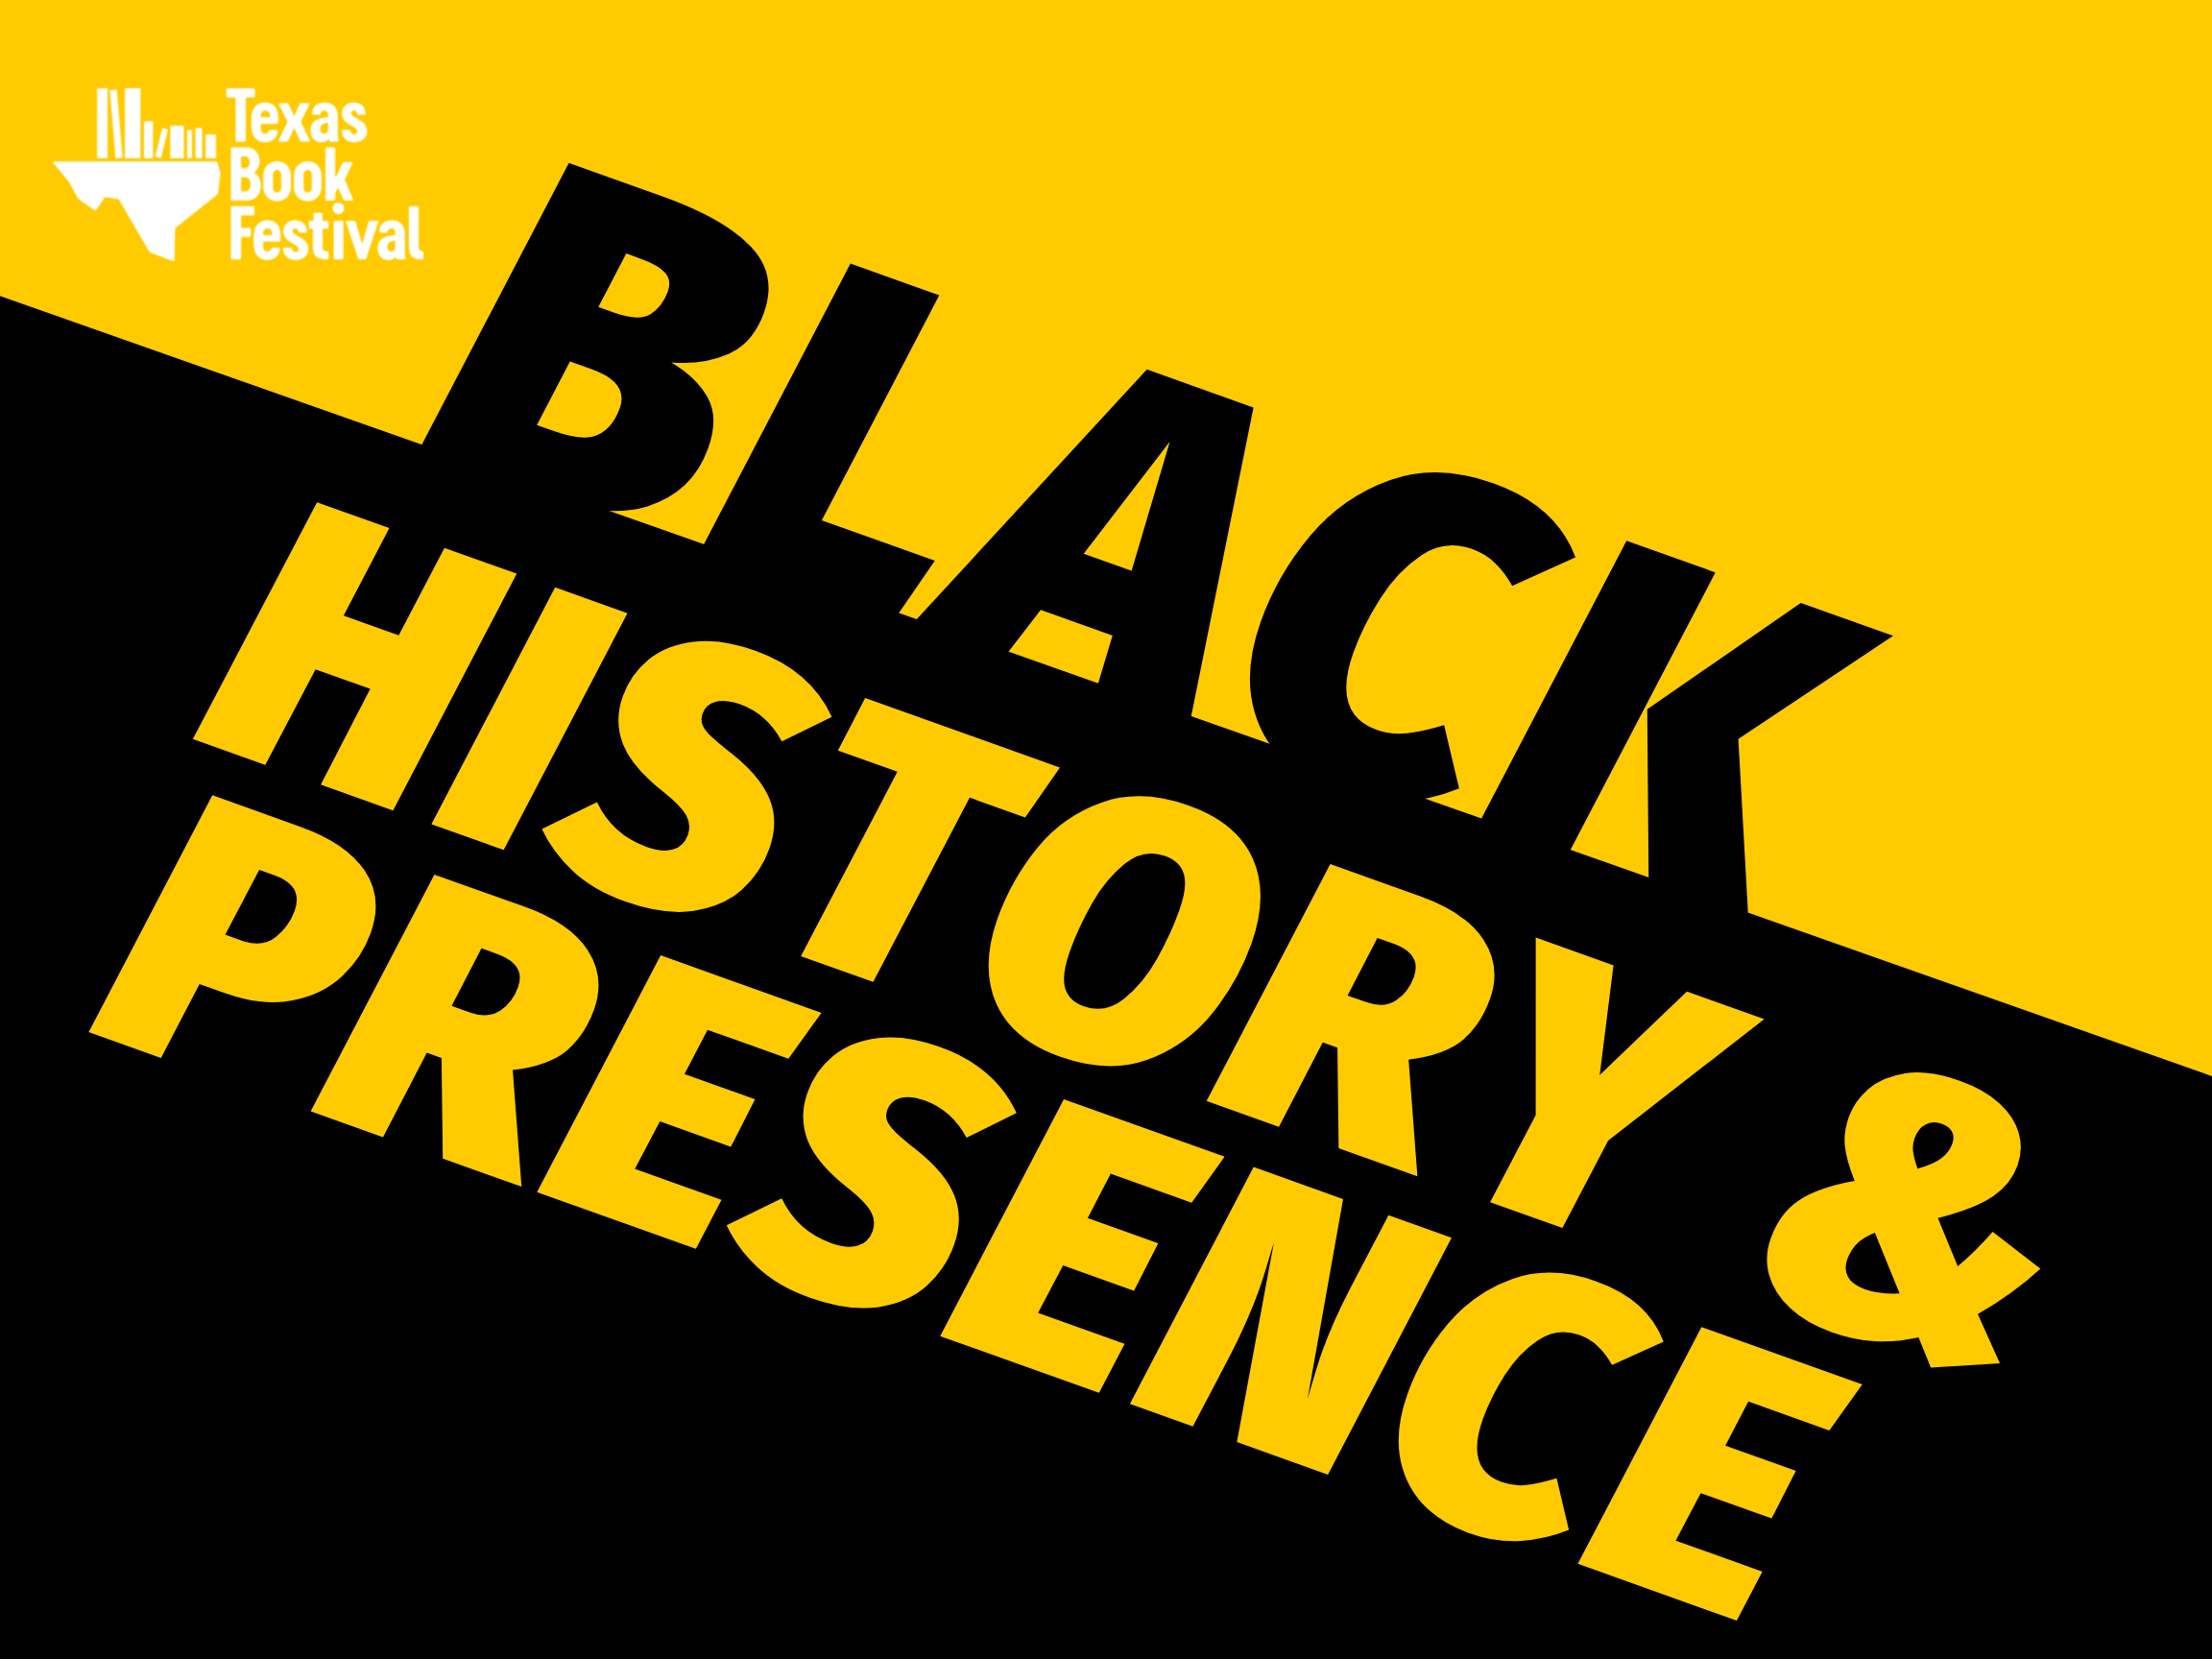 Black History and Presence